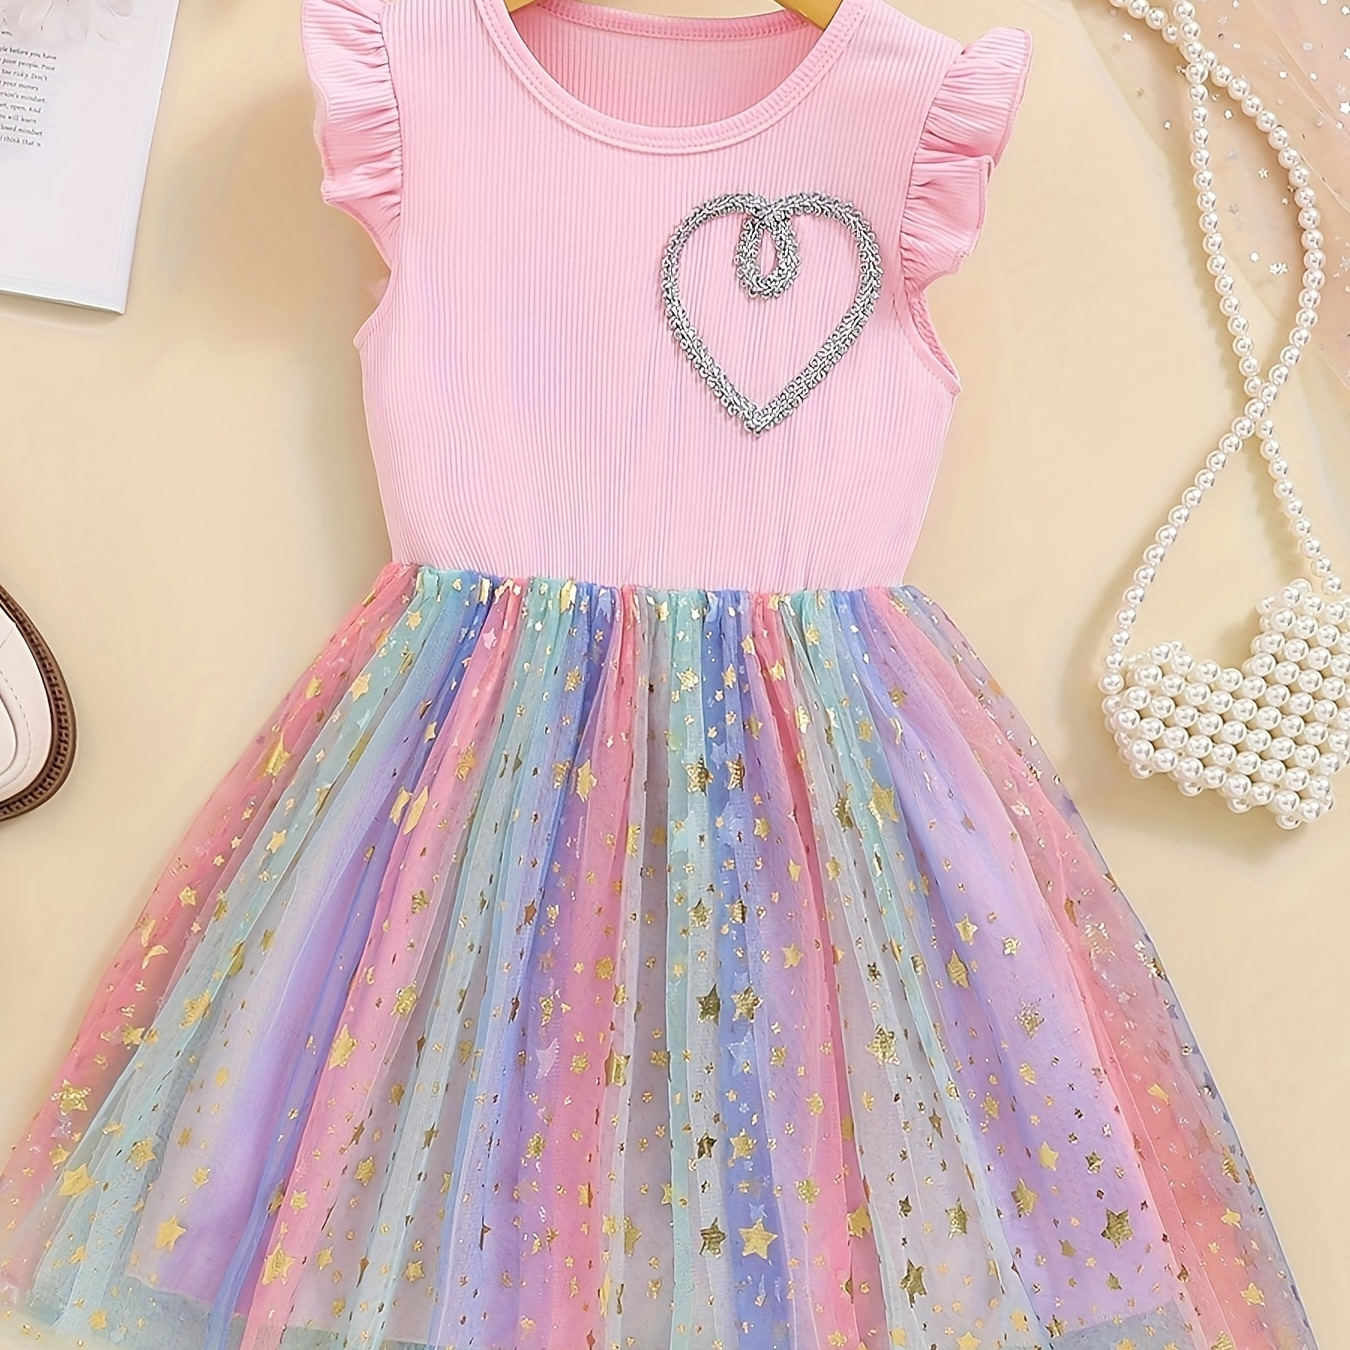 

Heart Design Ruffle Sleeve Tutu Dress, Dreamy Girls Sequin Decor Mesh Dress For Summer Holiday Party Gift